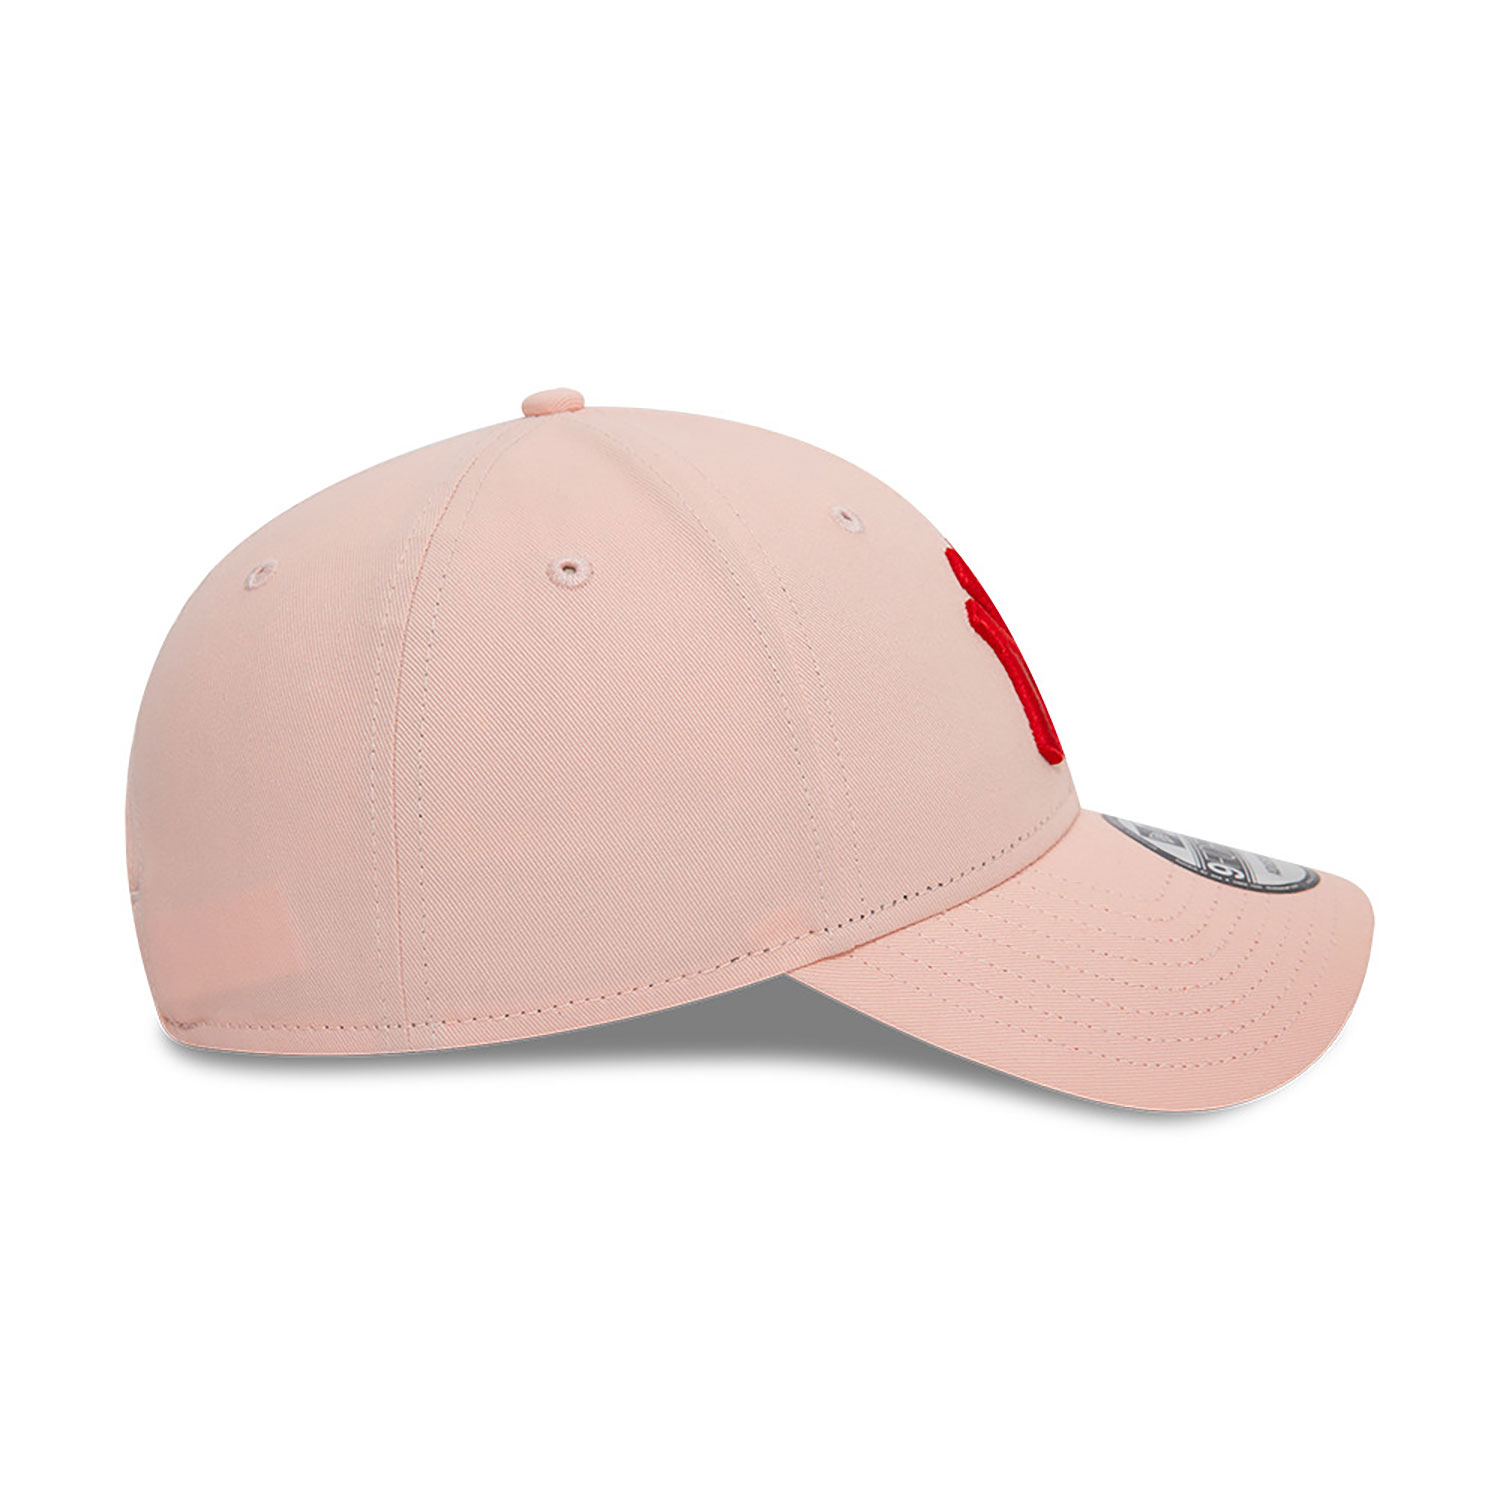 New York Yankees Bright Pop Pastel Pink 9FORTY Adjustable Cap